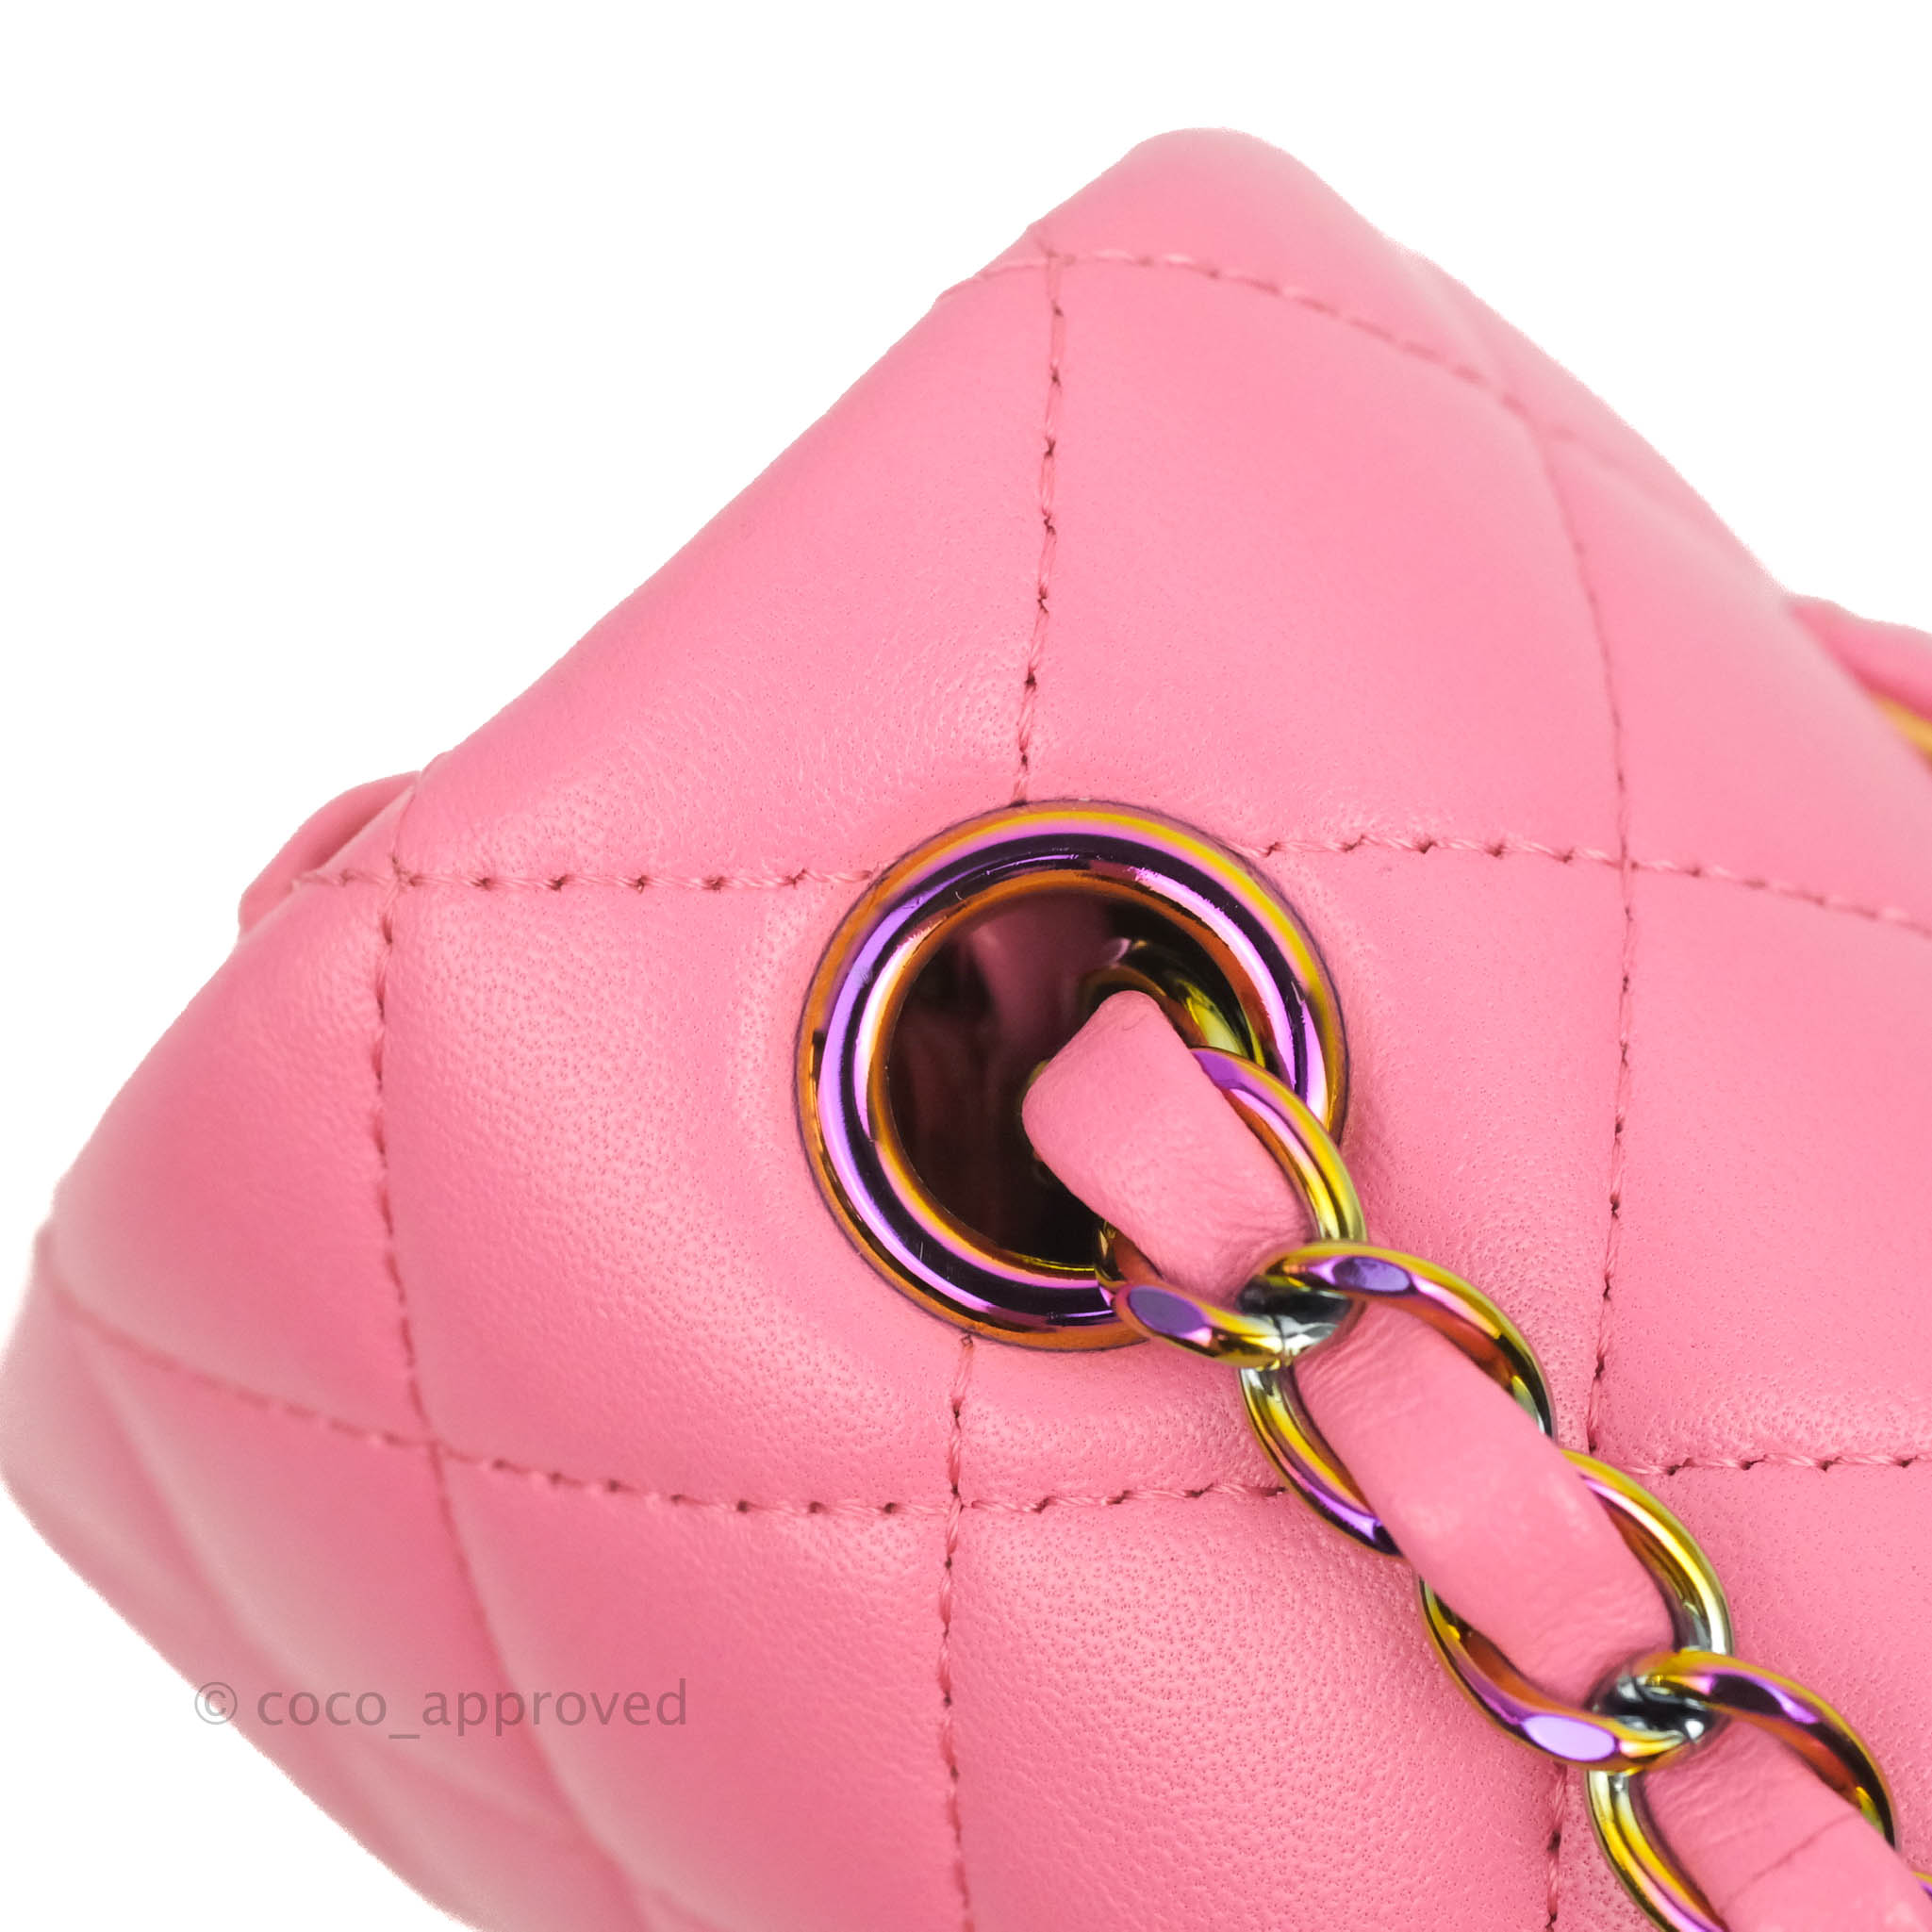 Chanel Mini Rectangular Flap Bag Rose Lambskin Silver Hardware Pink Madison Avenue Couture